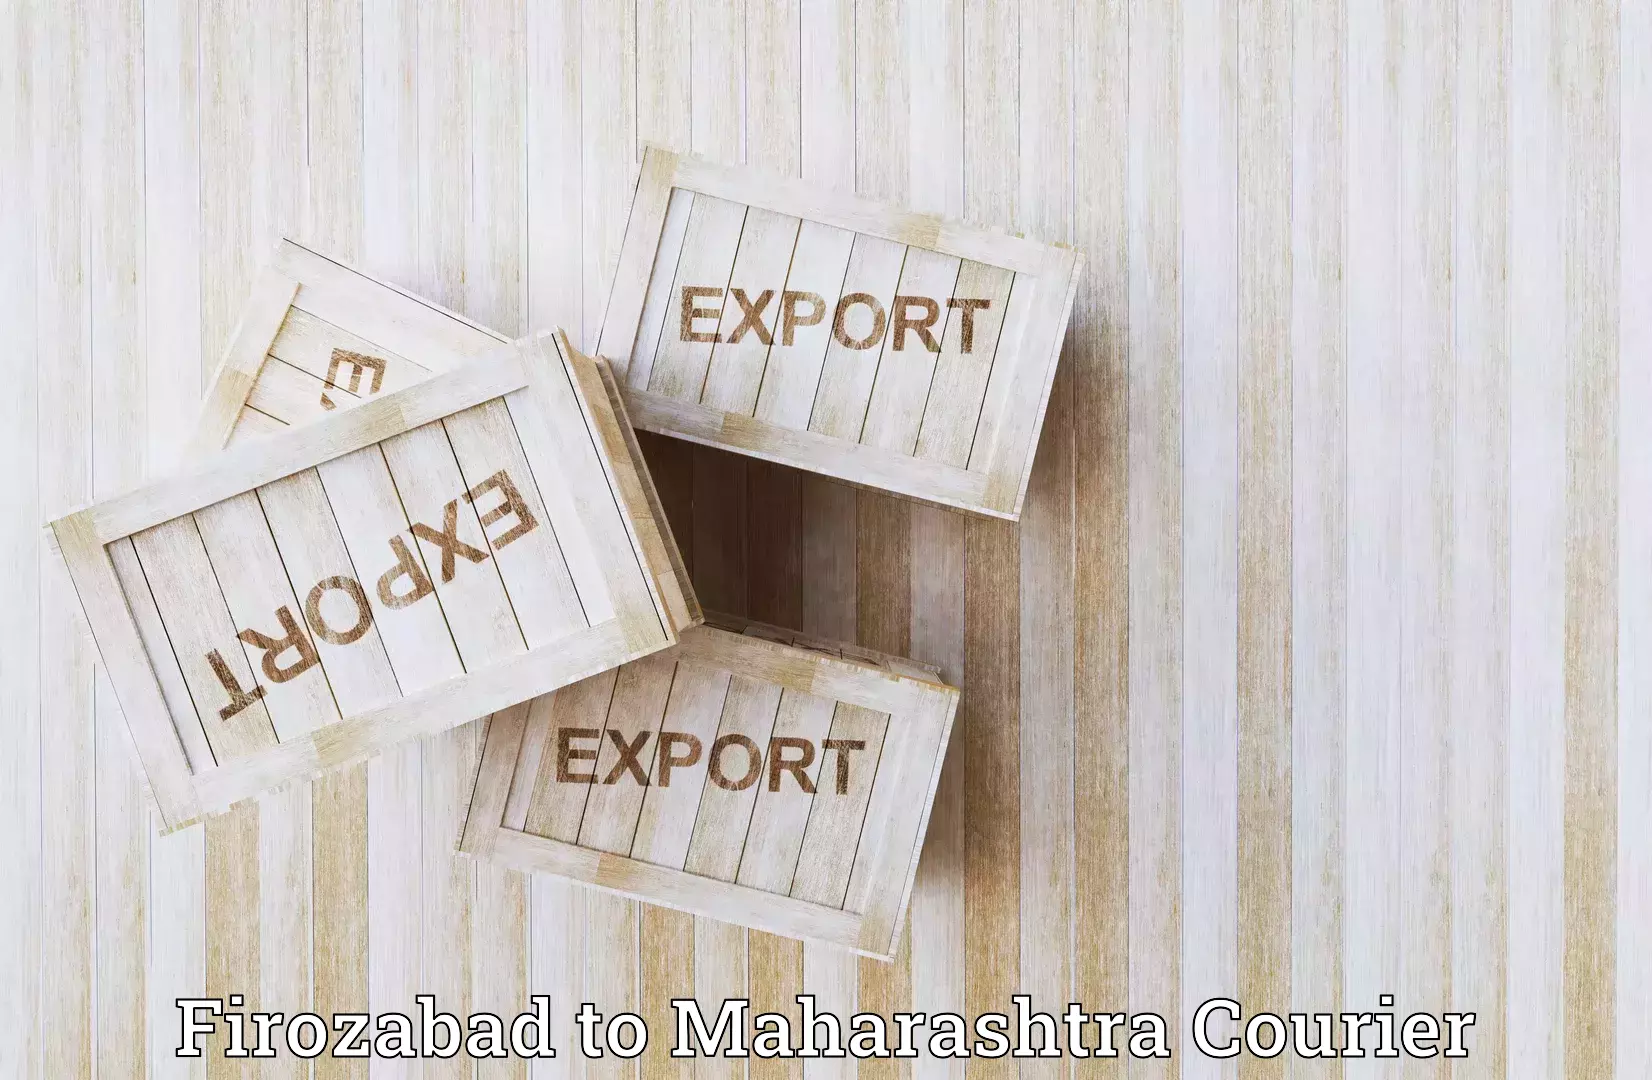 Digital shipping tools in Firozabad to Shirpur